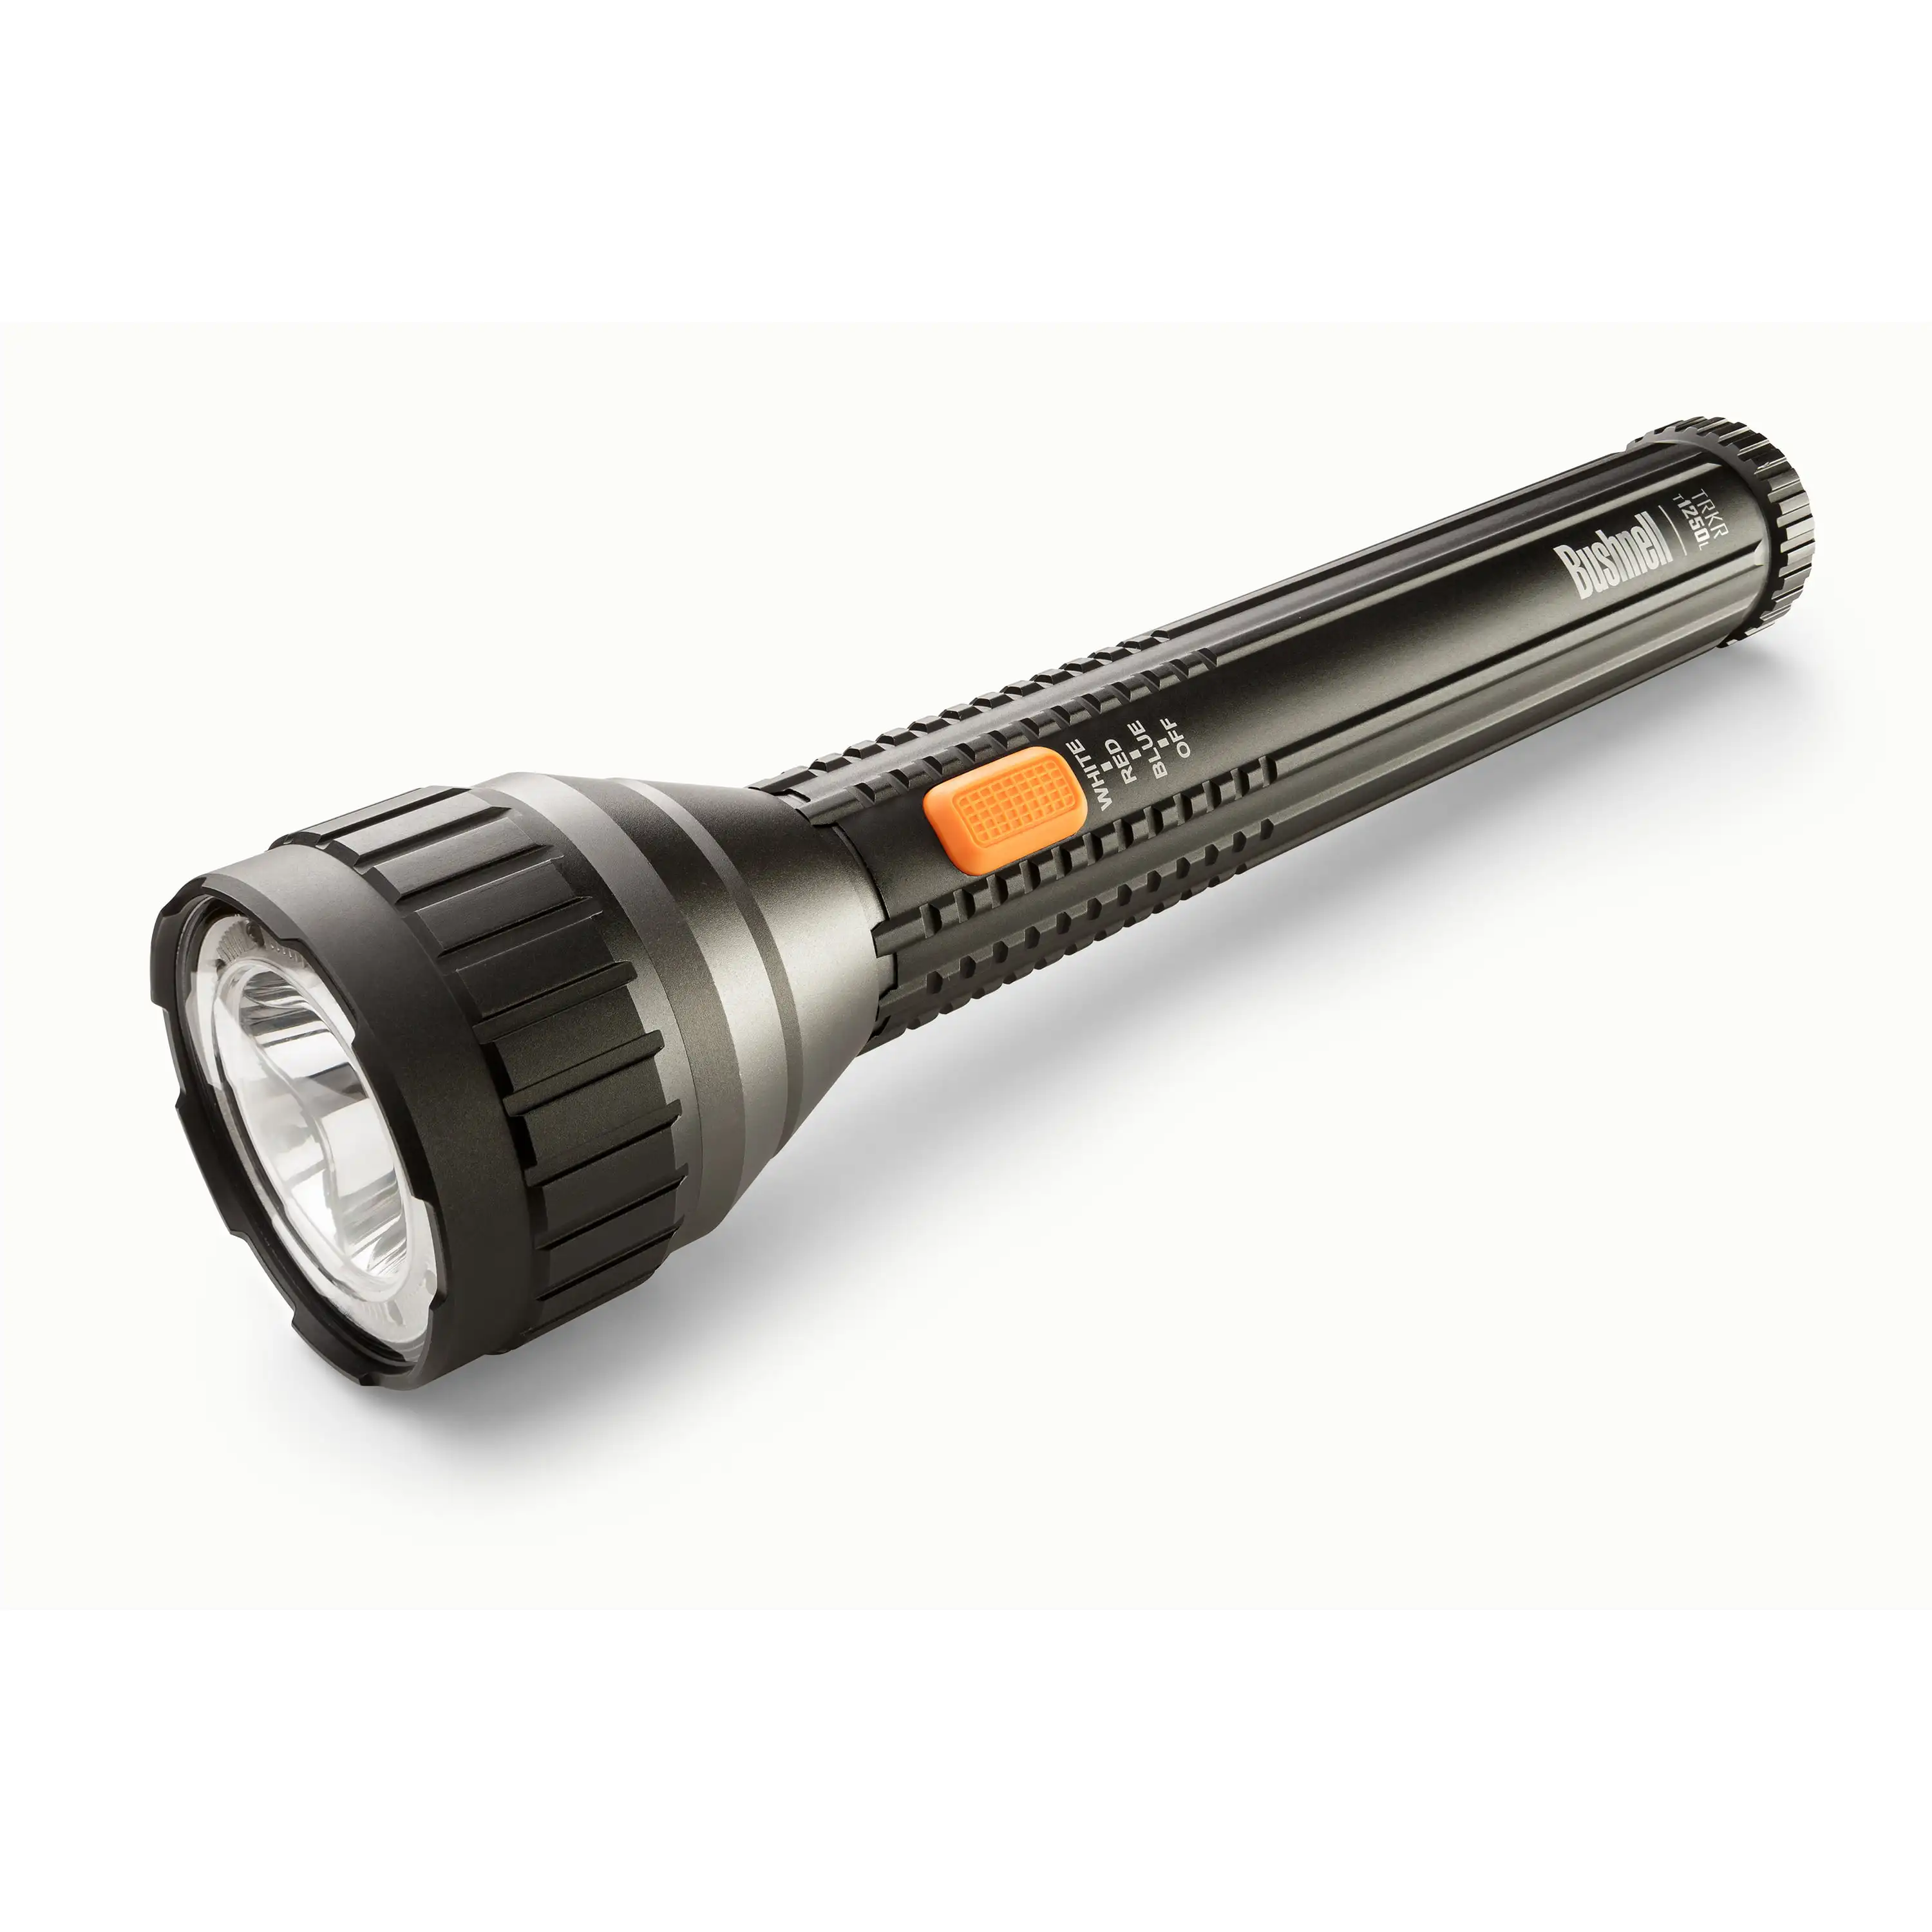 

HMTX ® TRKR 1250 Lumen Multi-Color Handheld LED Flashlight (9 AA Batteries Included)